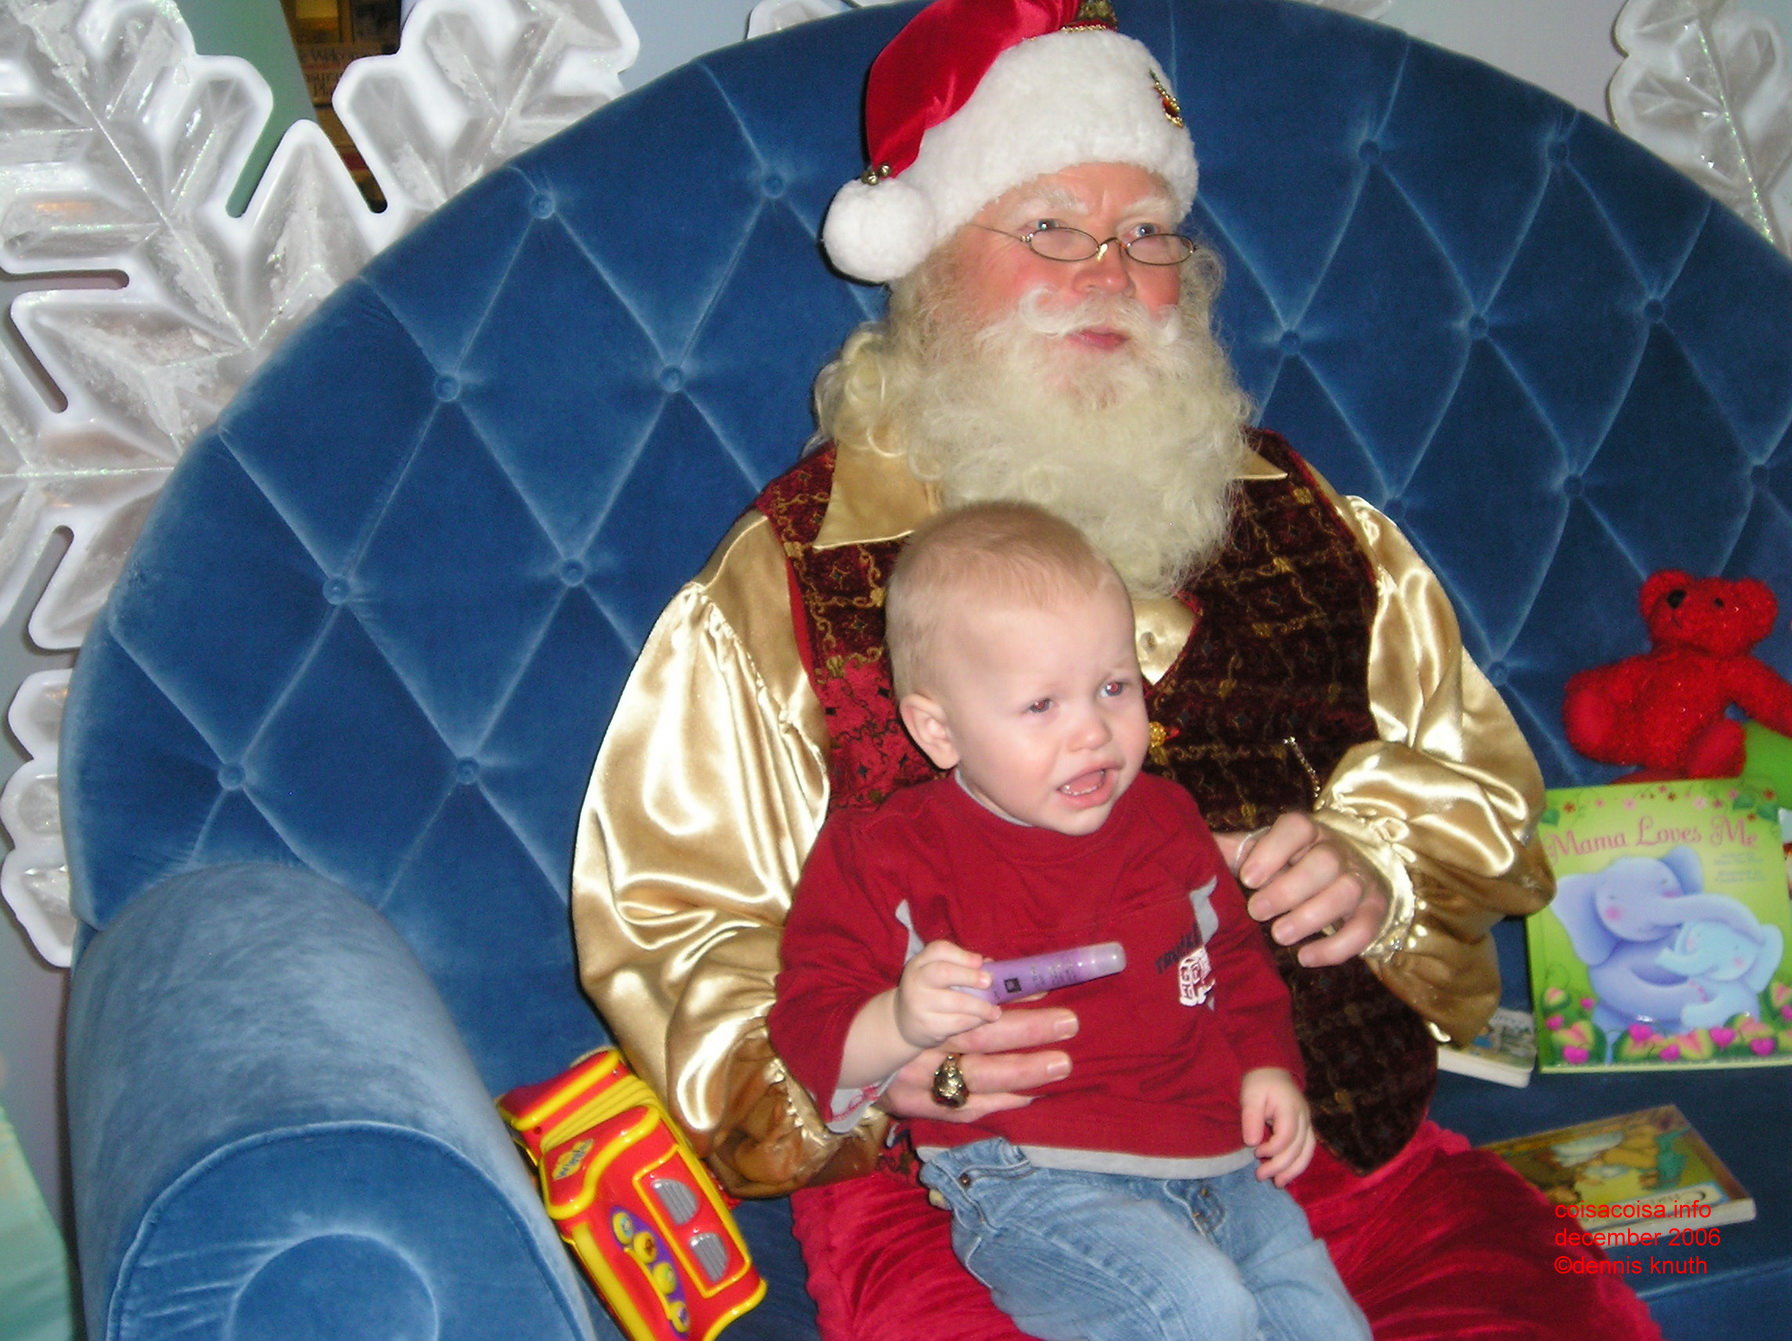 Santa's lap gets a visit from Jared